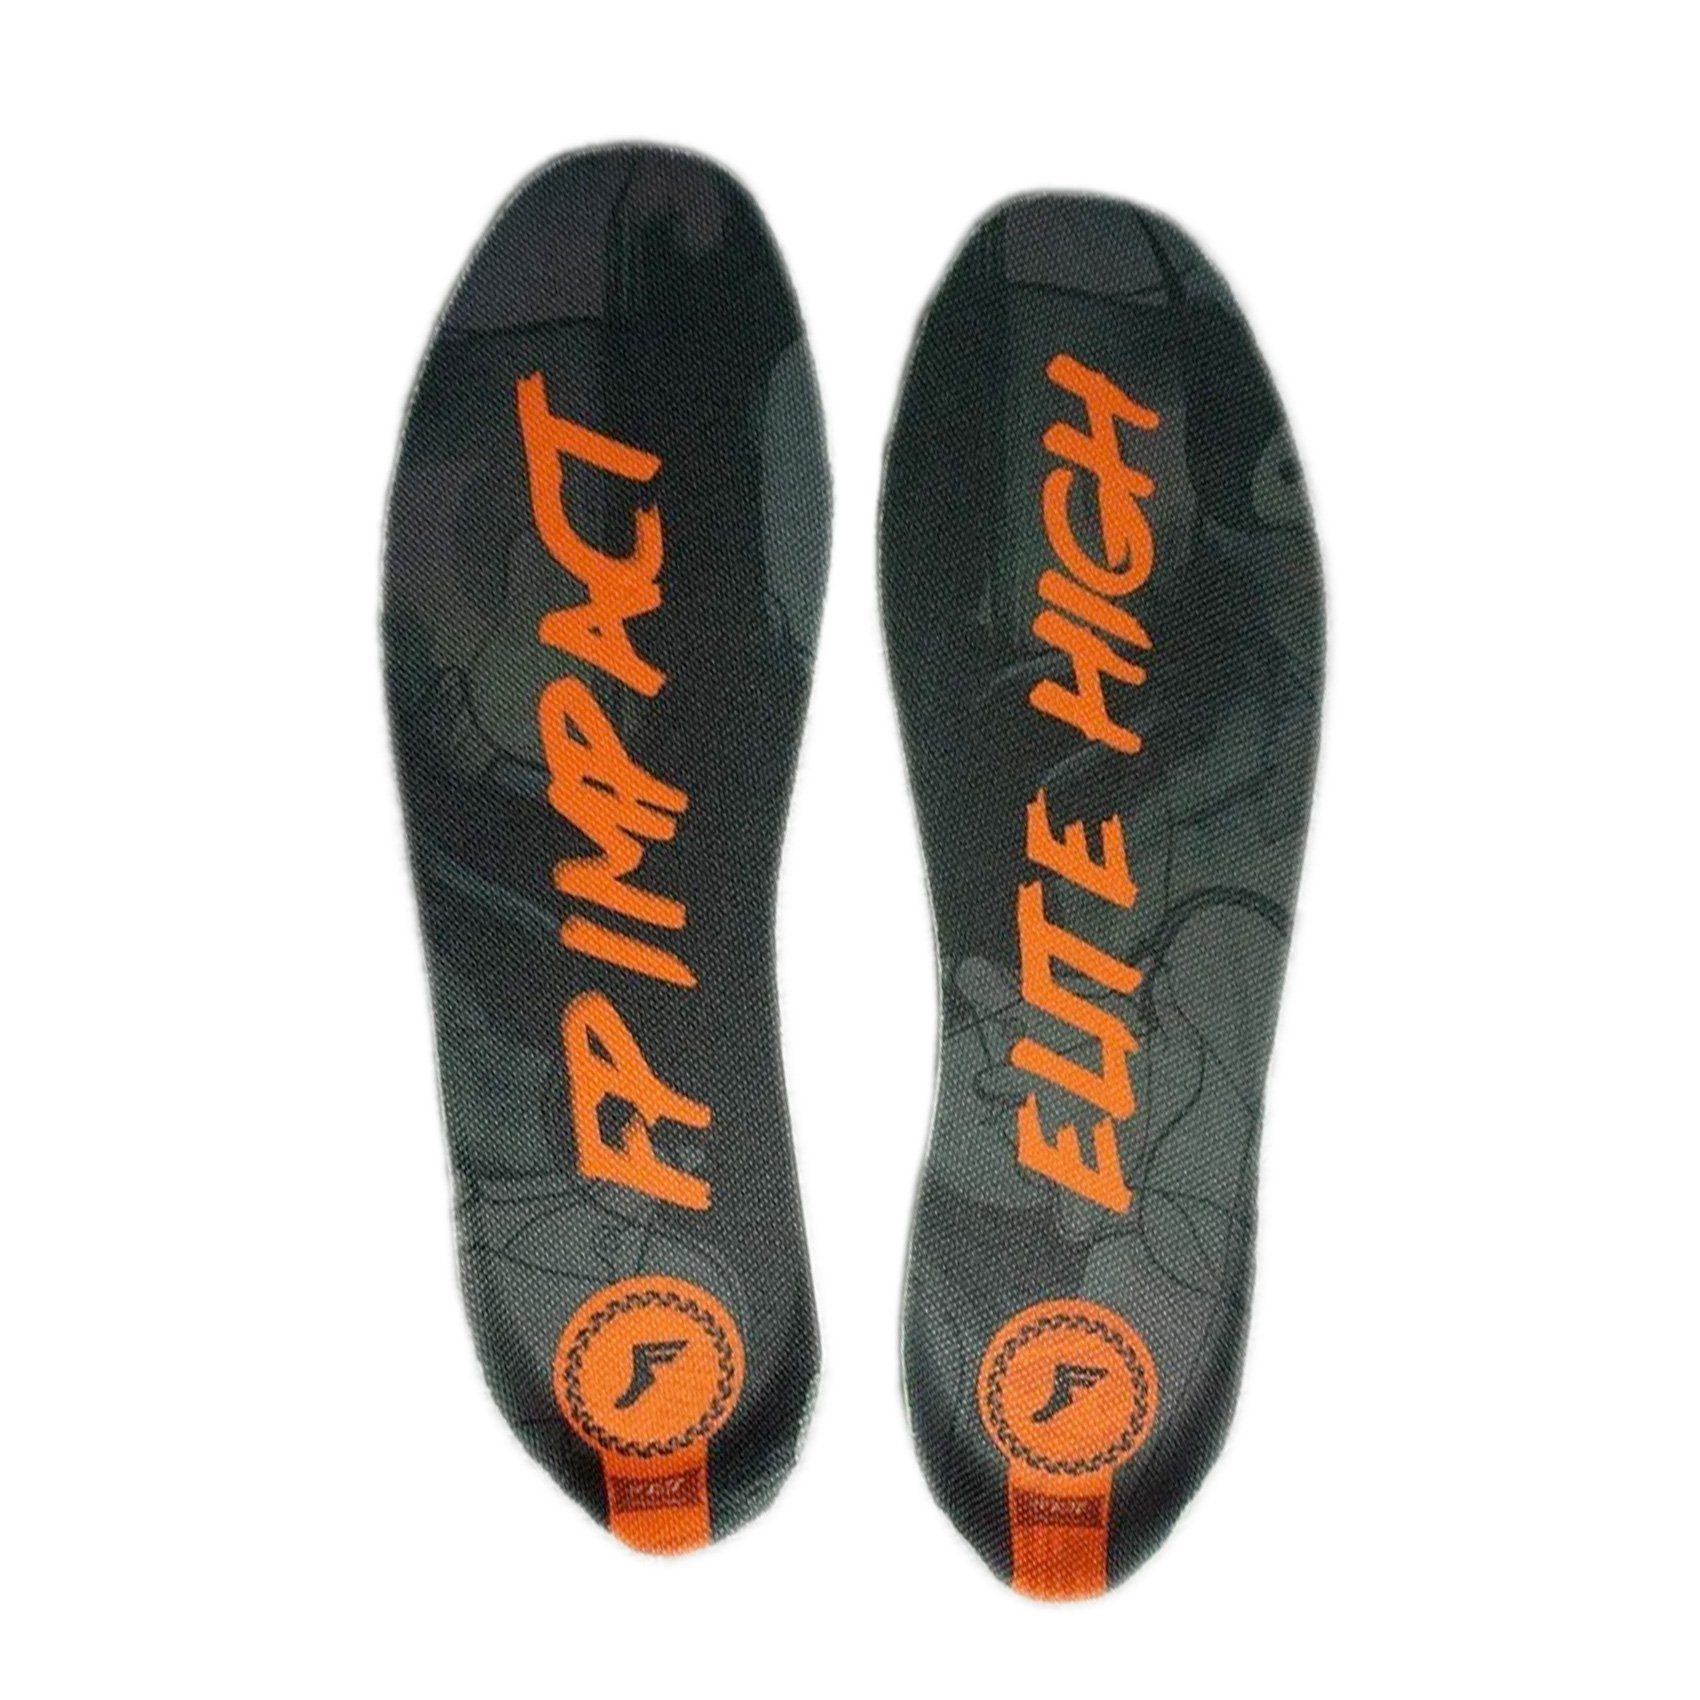 Footprint Insole Fuß- und Gelenkdämpfer Elite - (1 Paar) (High) Classic Kingfoam